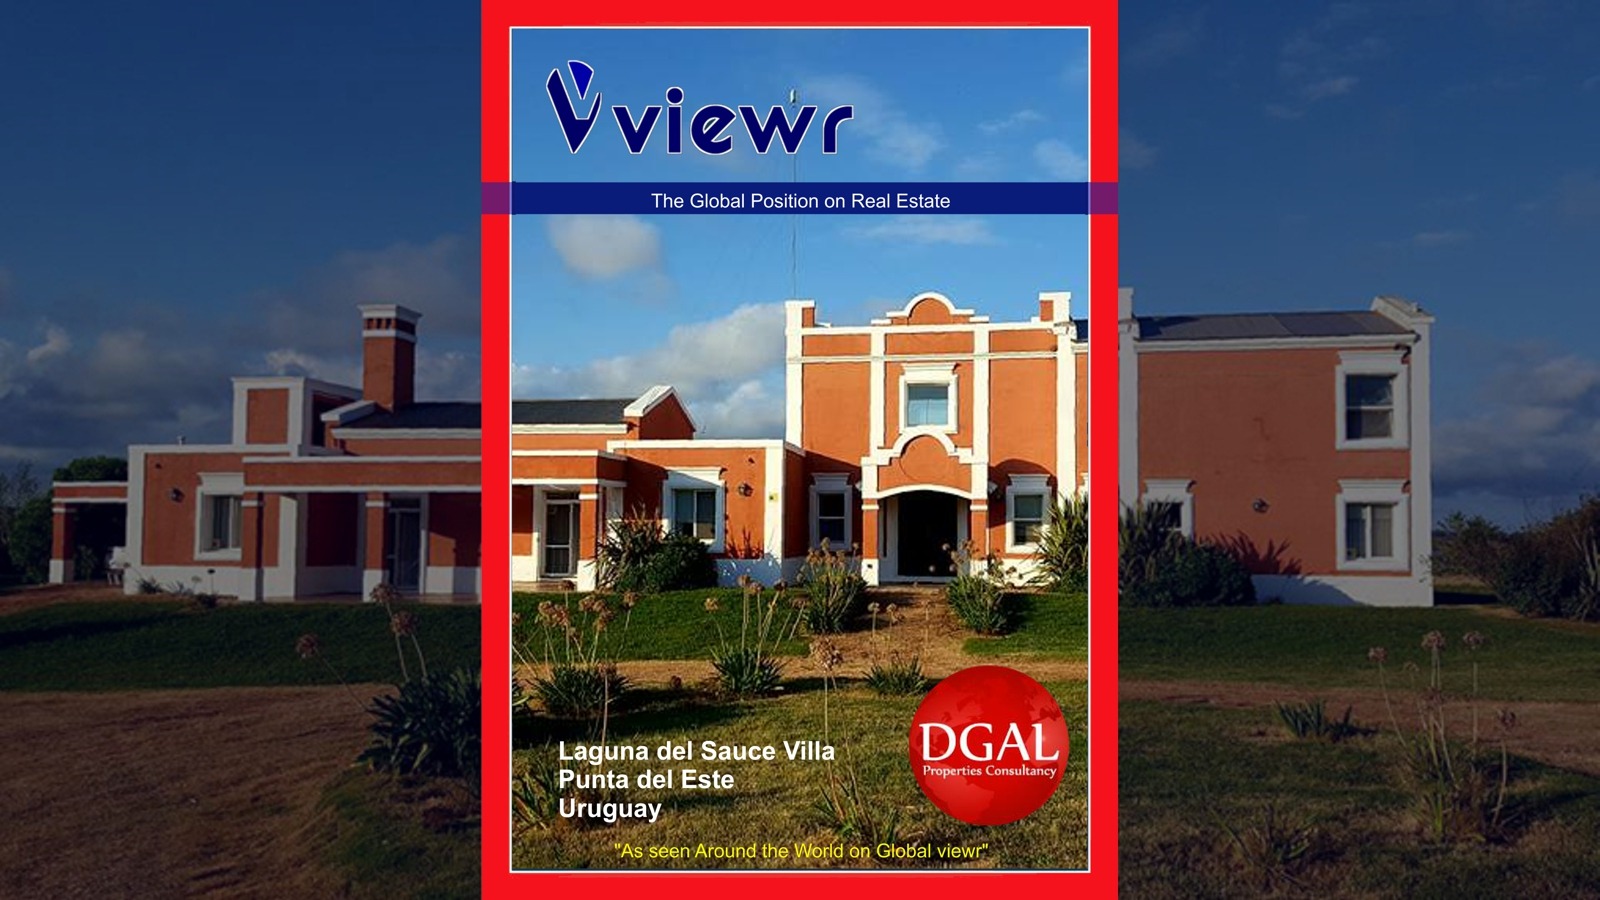 Global viewr Magazine DGAL Properties Consultancy Uruguay Argentina Punta del Este Laguna del Sauce Villa